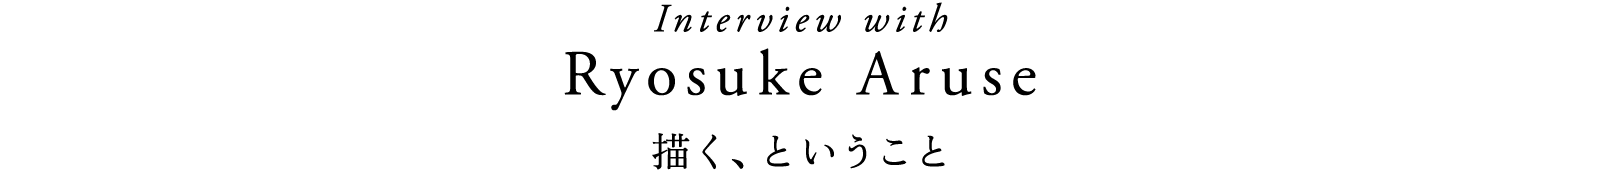 Interview with Aruse Ryosuke